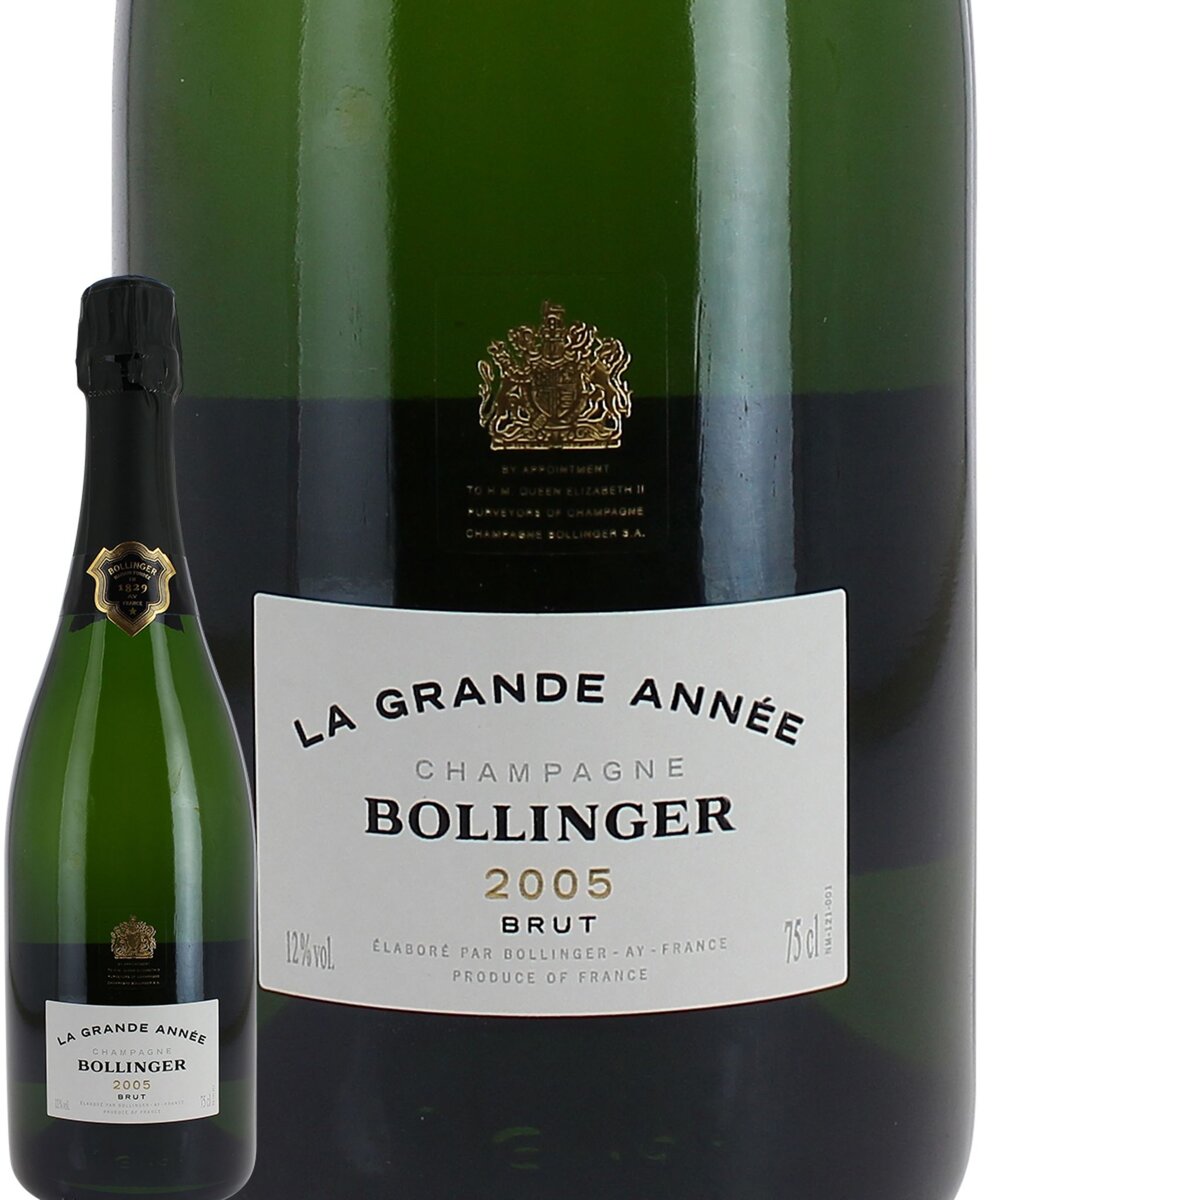 Champagne Bollinger La Grande Année Champagne Brut 2005